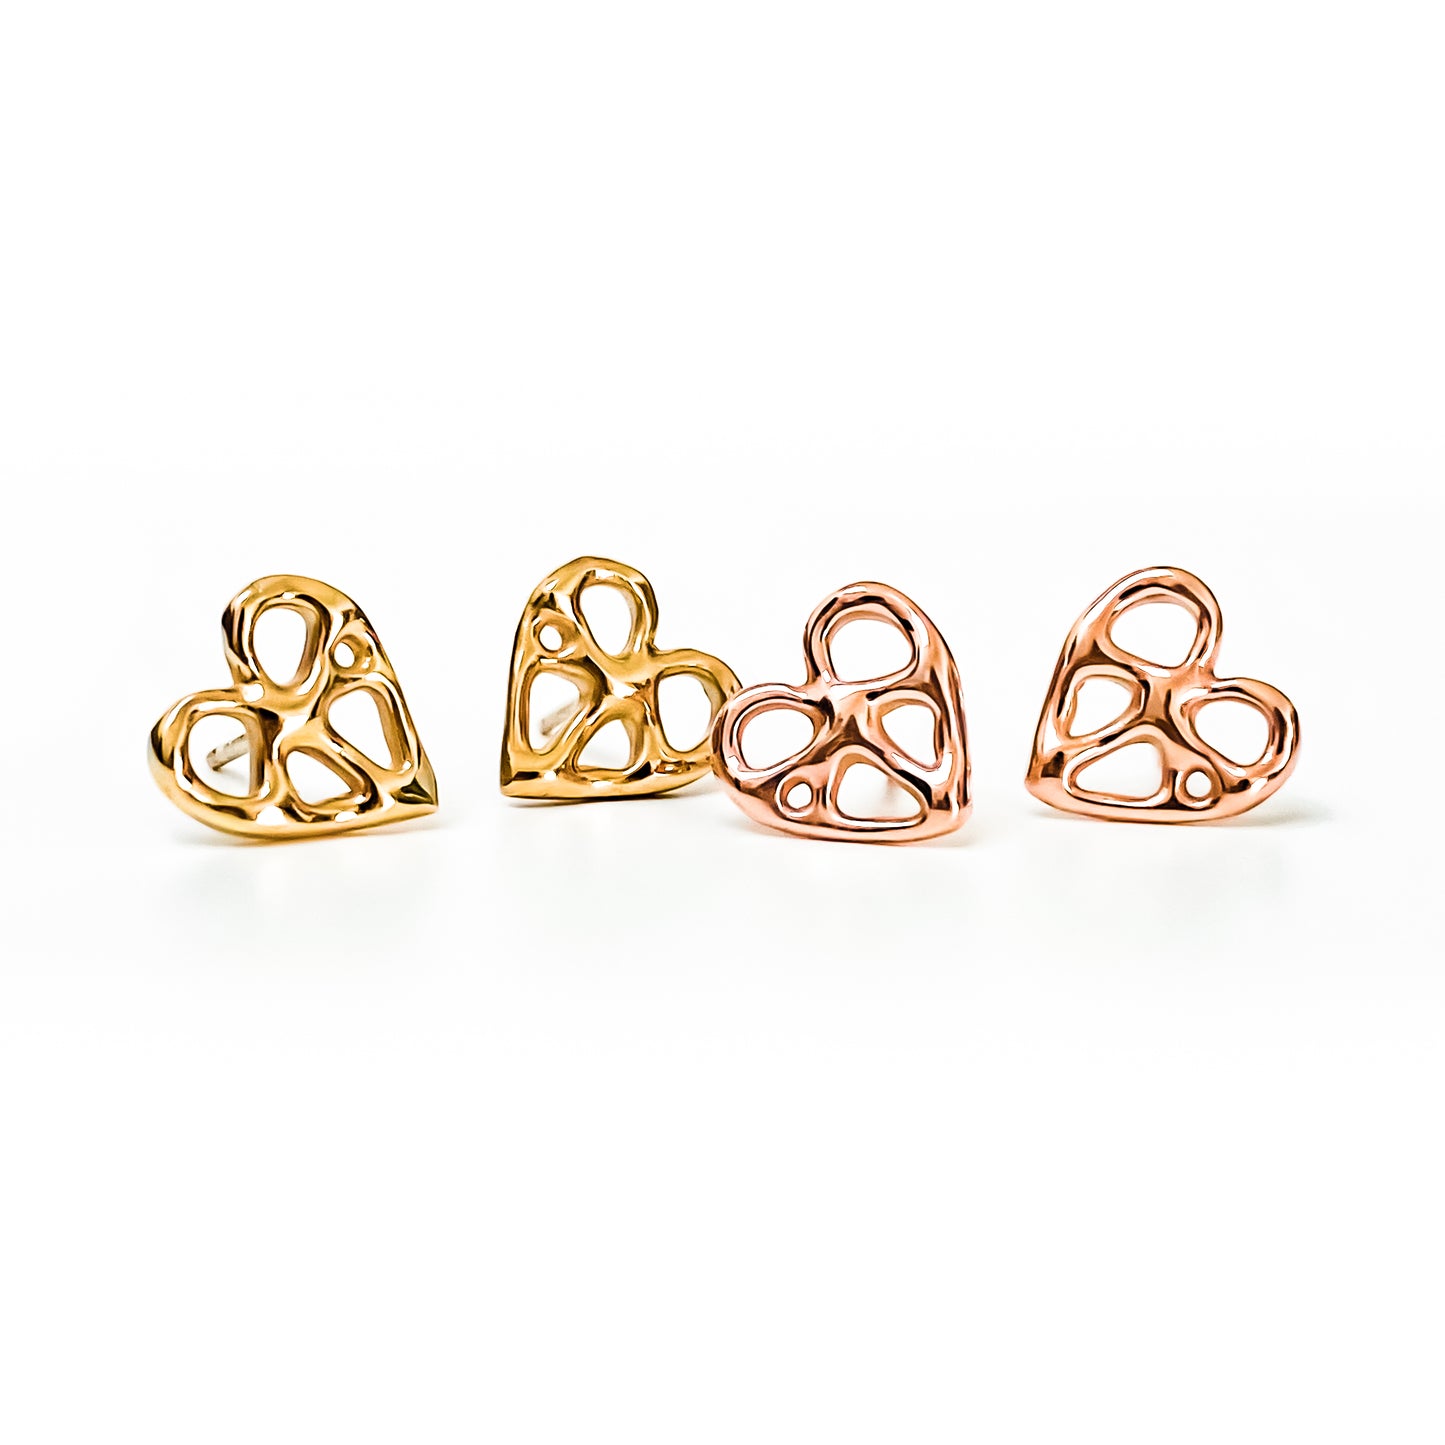 Rose Gold Infinity Heart Stud Earrings